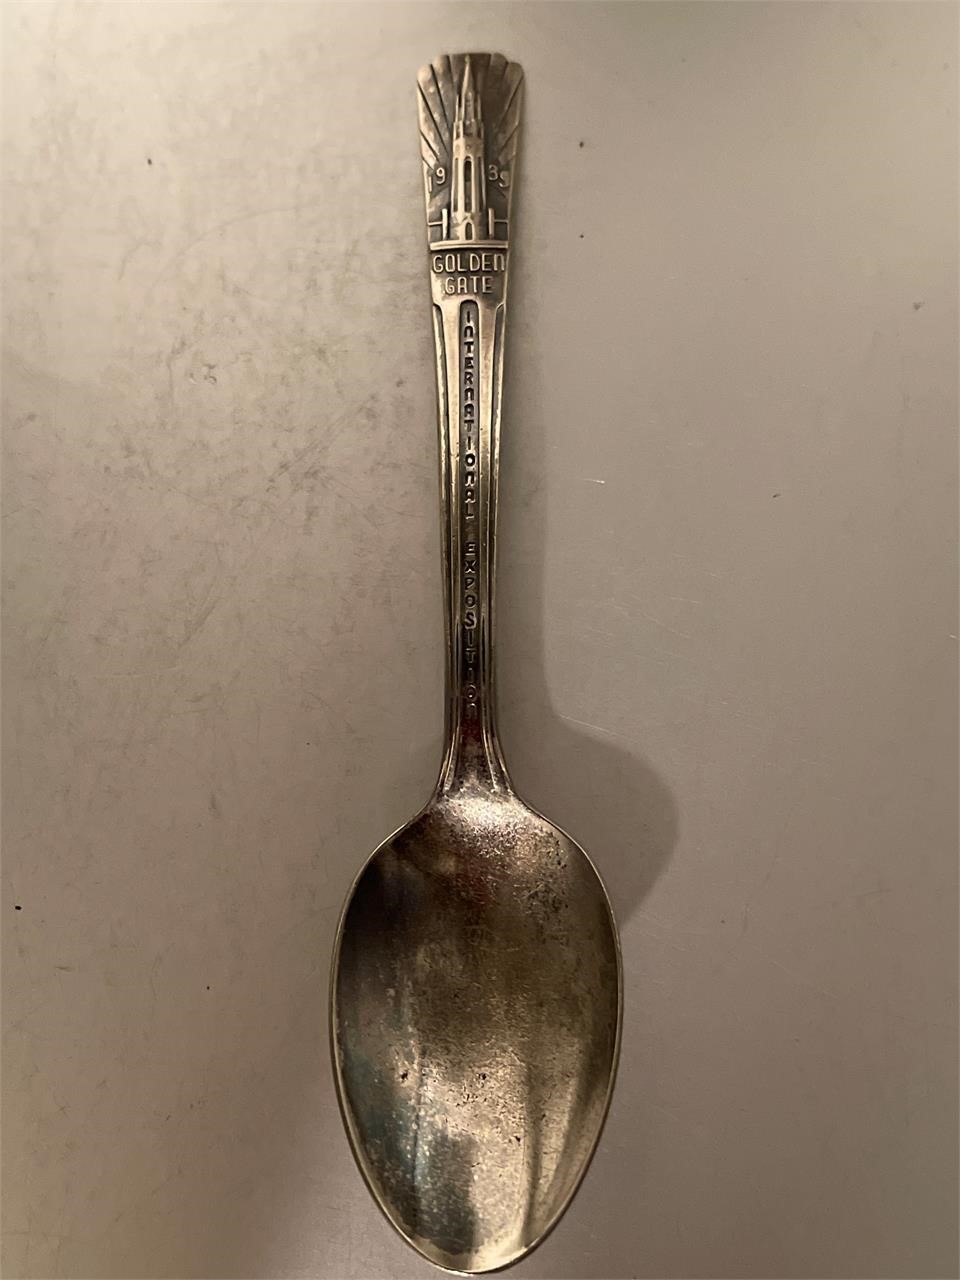 1939 golden gate spoon